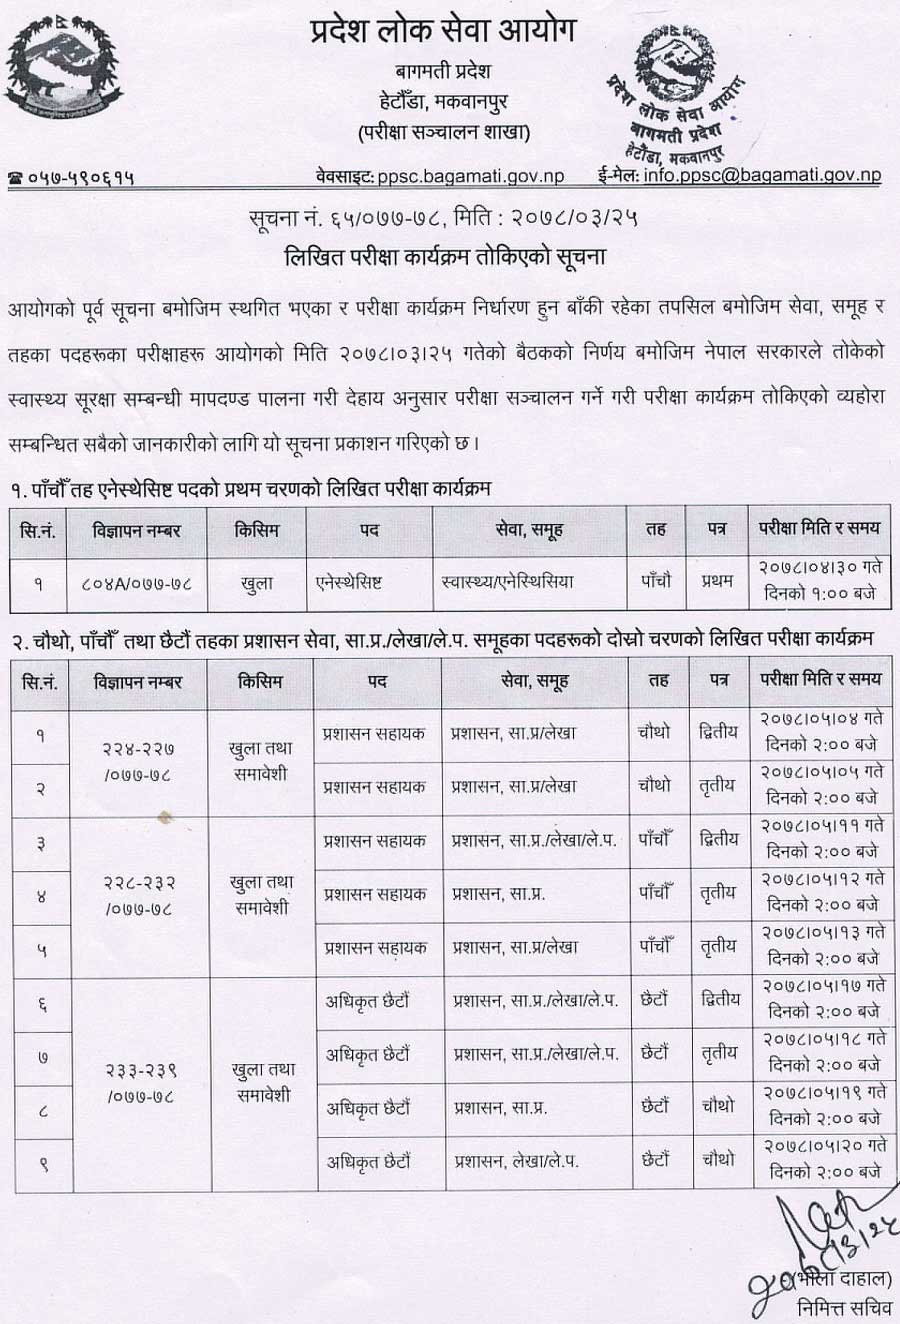 Bagmati Pradesh Lok Sewa Aayog Written Exam Schedule of 4th, 5th and 6th Level